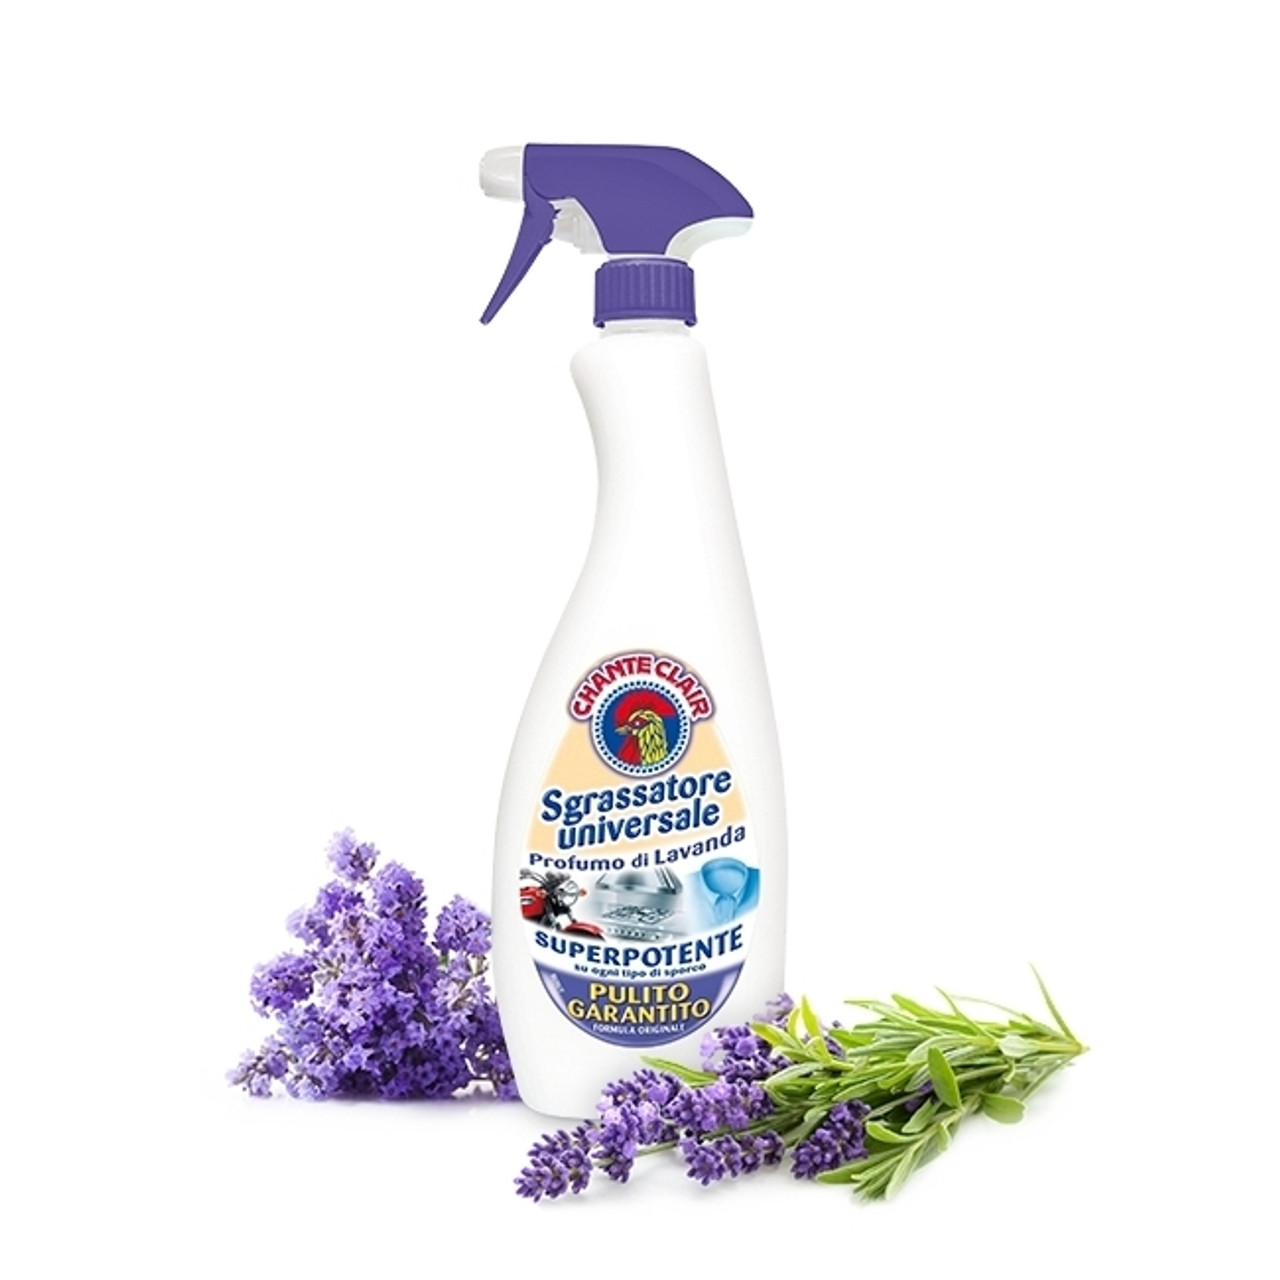 Chanteclair lavender degreaser ml600